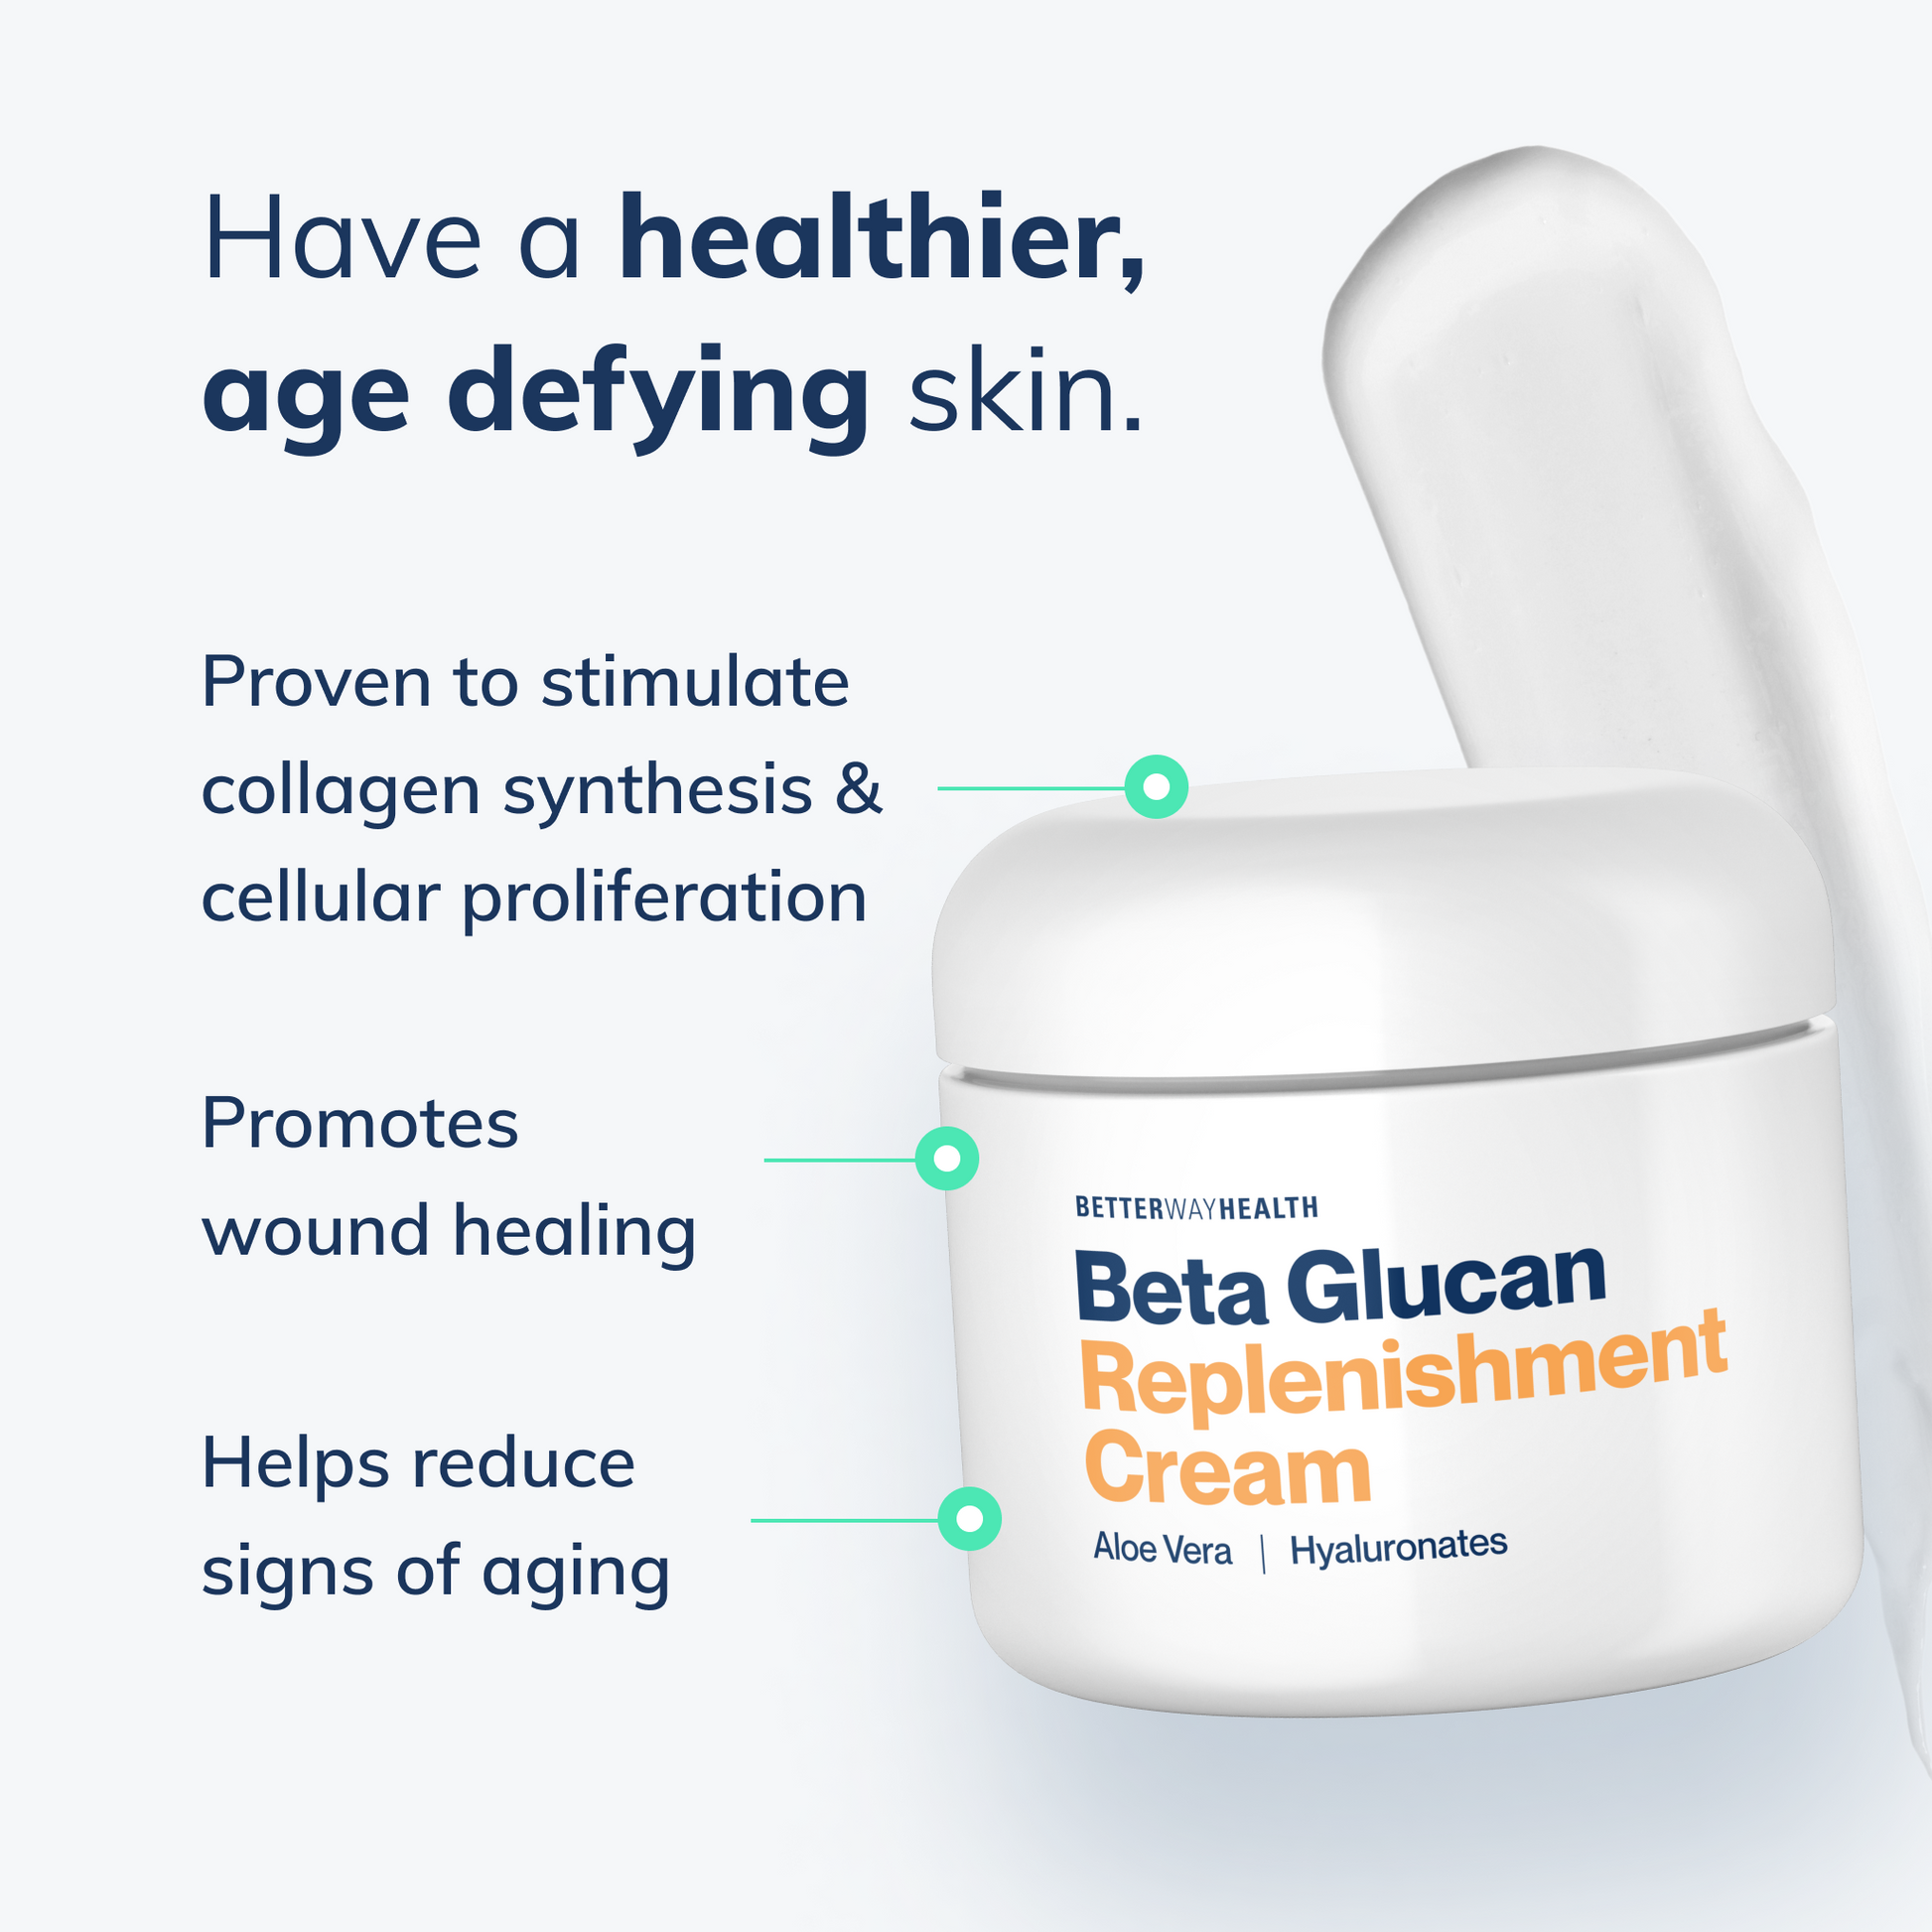 infographic of the benefits of beta glucan skin cream